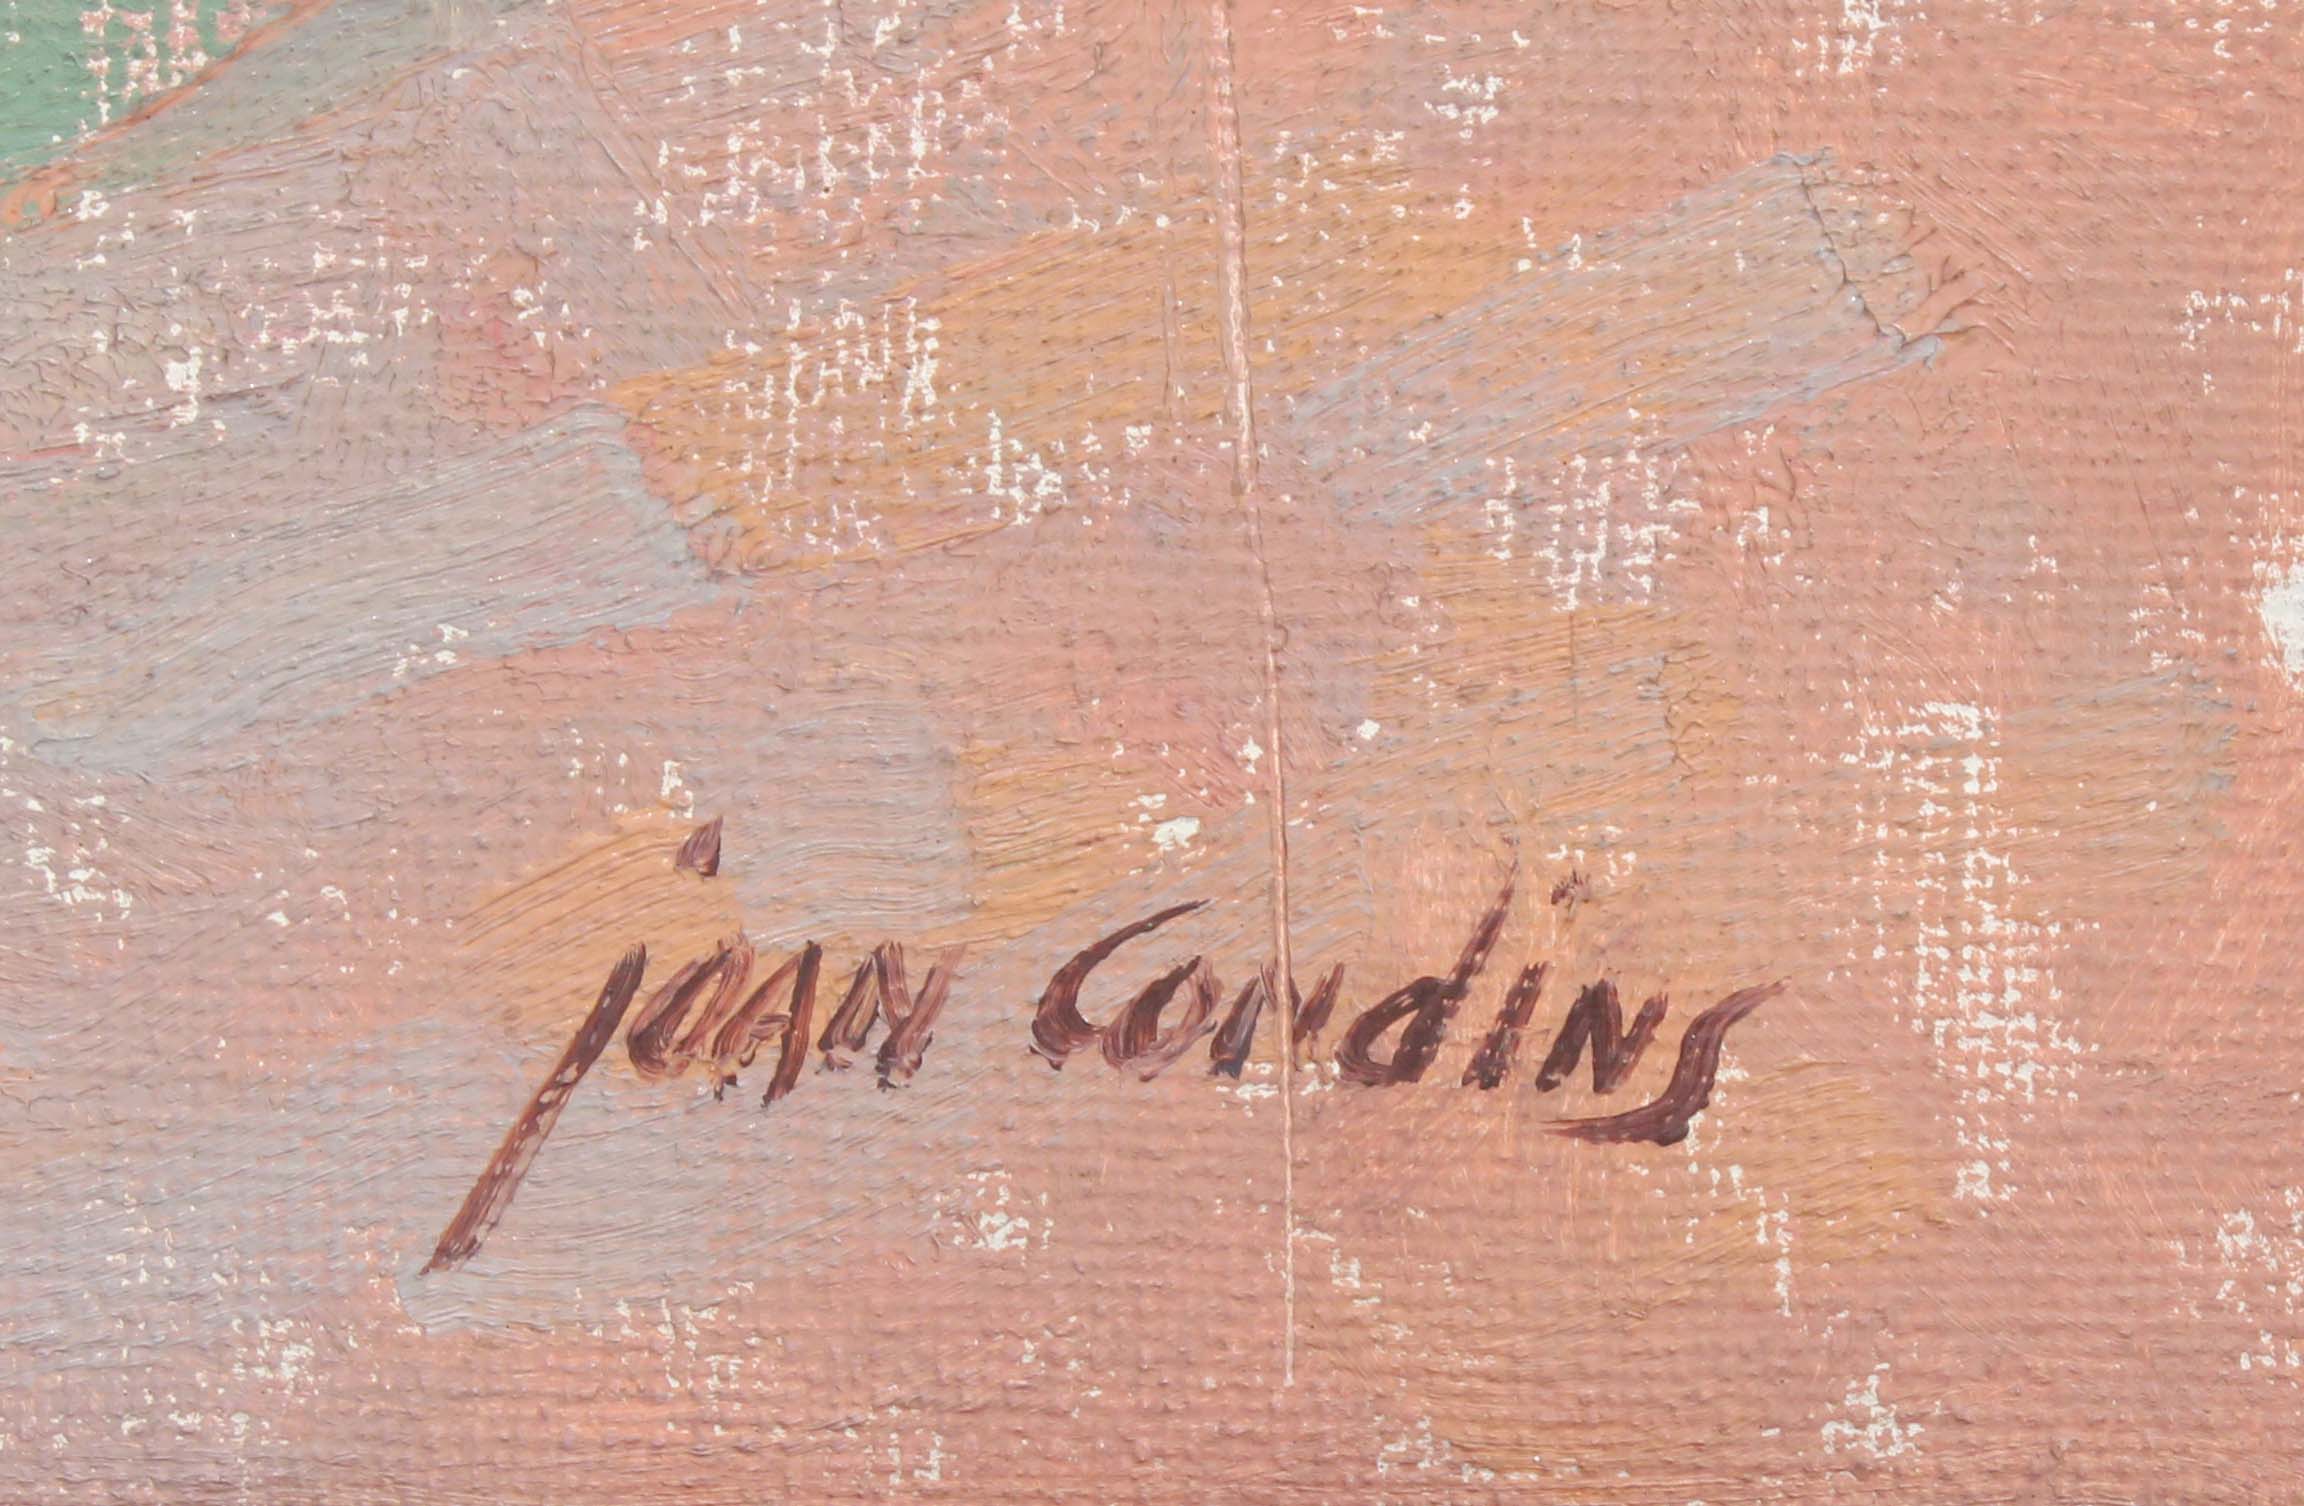 JOAN CONDINS (1929). "PRIMAVERA", 1986.